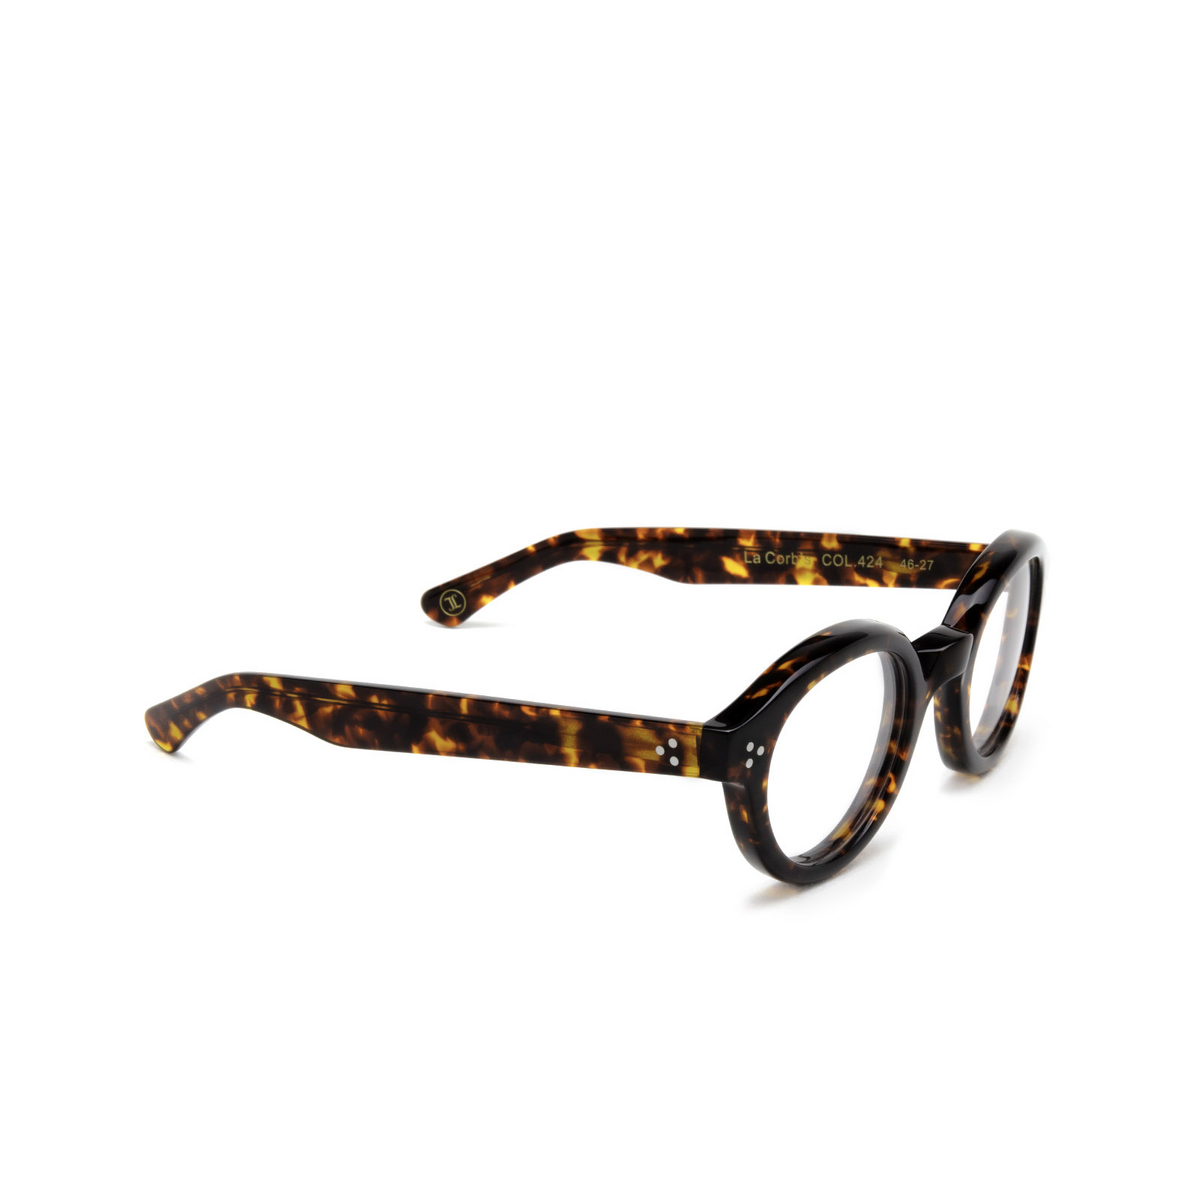 Lesca® Round Eyeglasses: La Corbs Optic color Dark Tortoise 424 - three-quarters view.